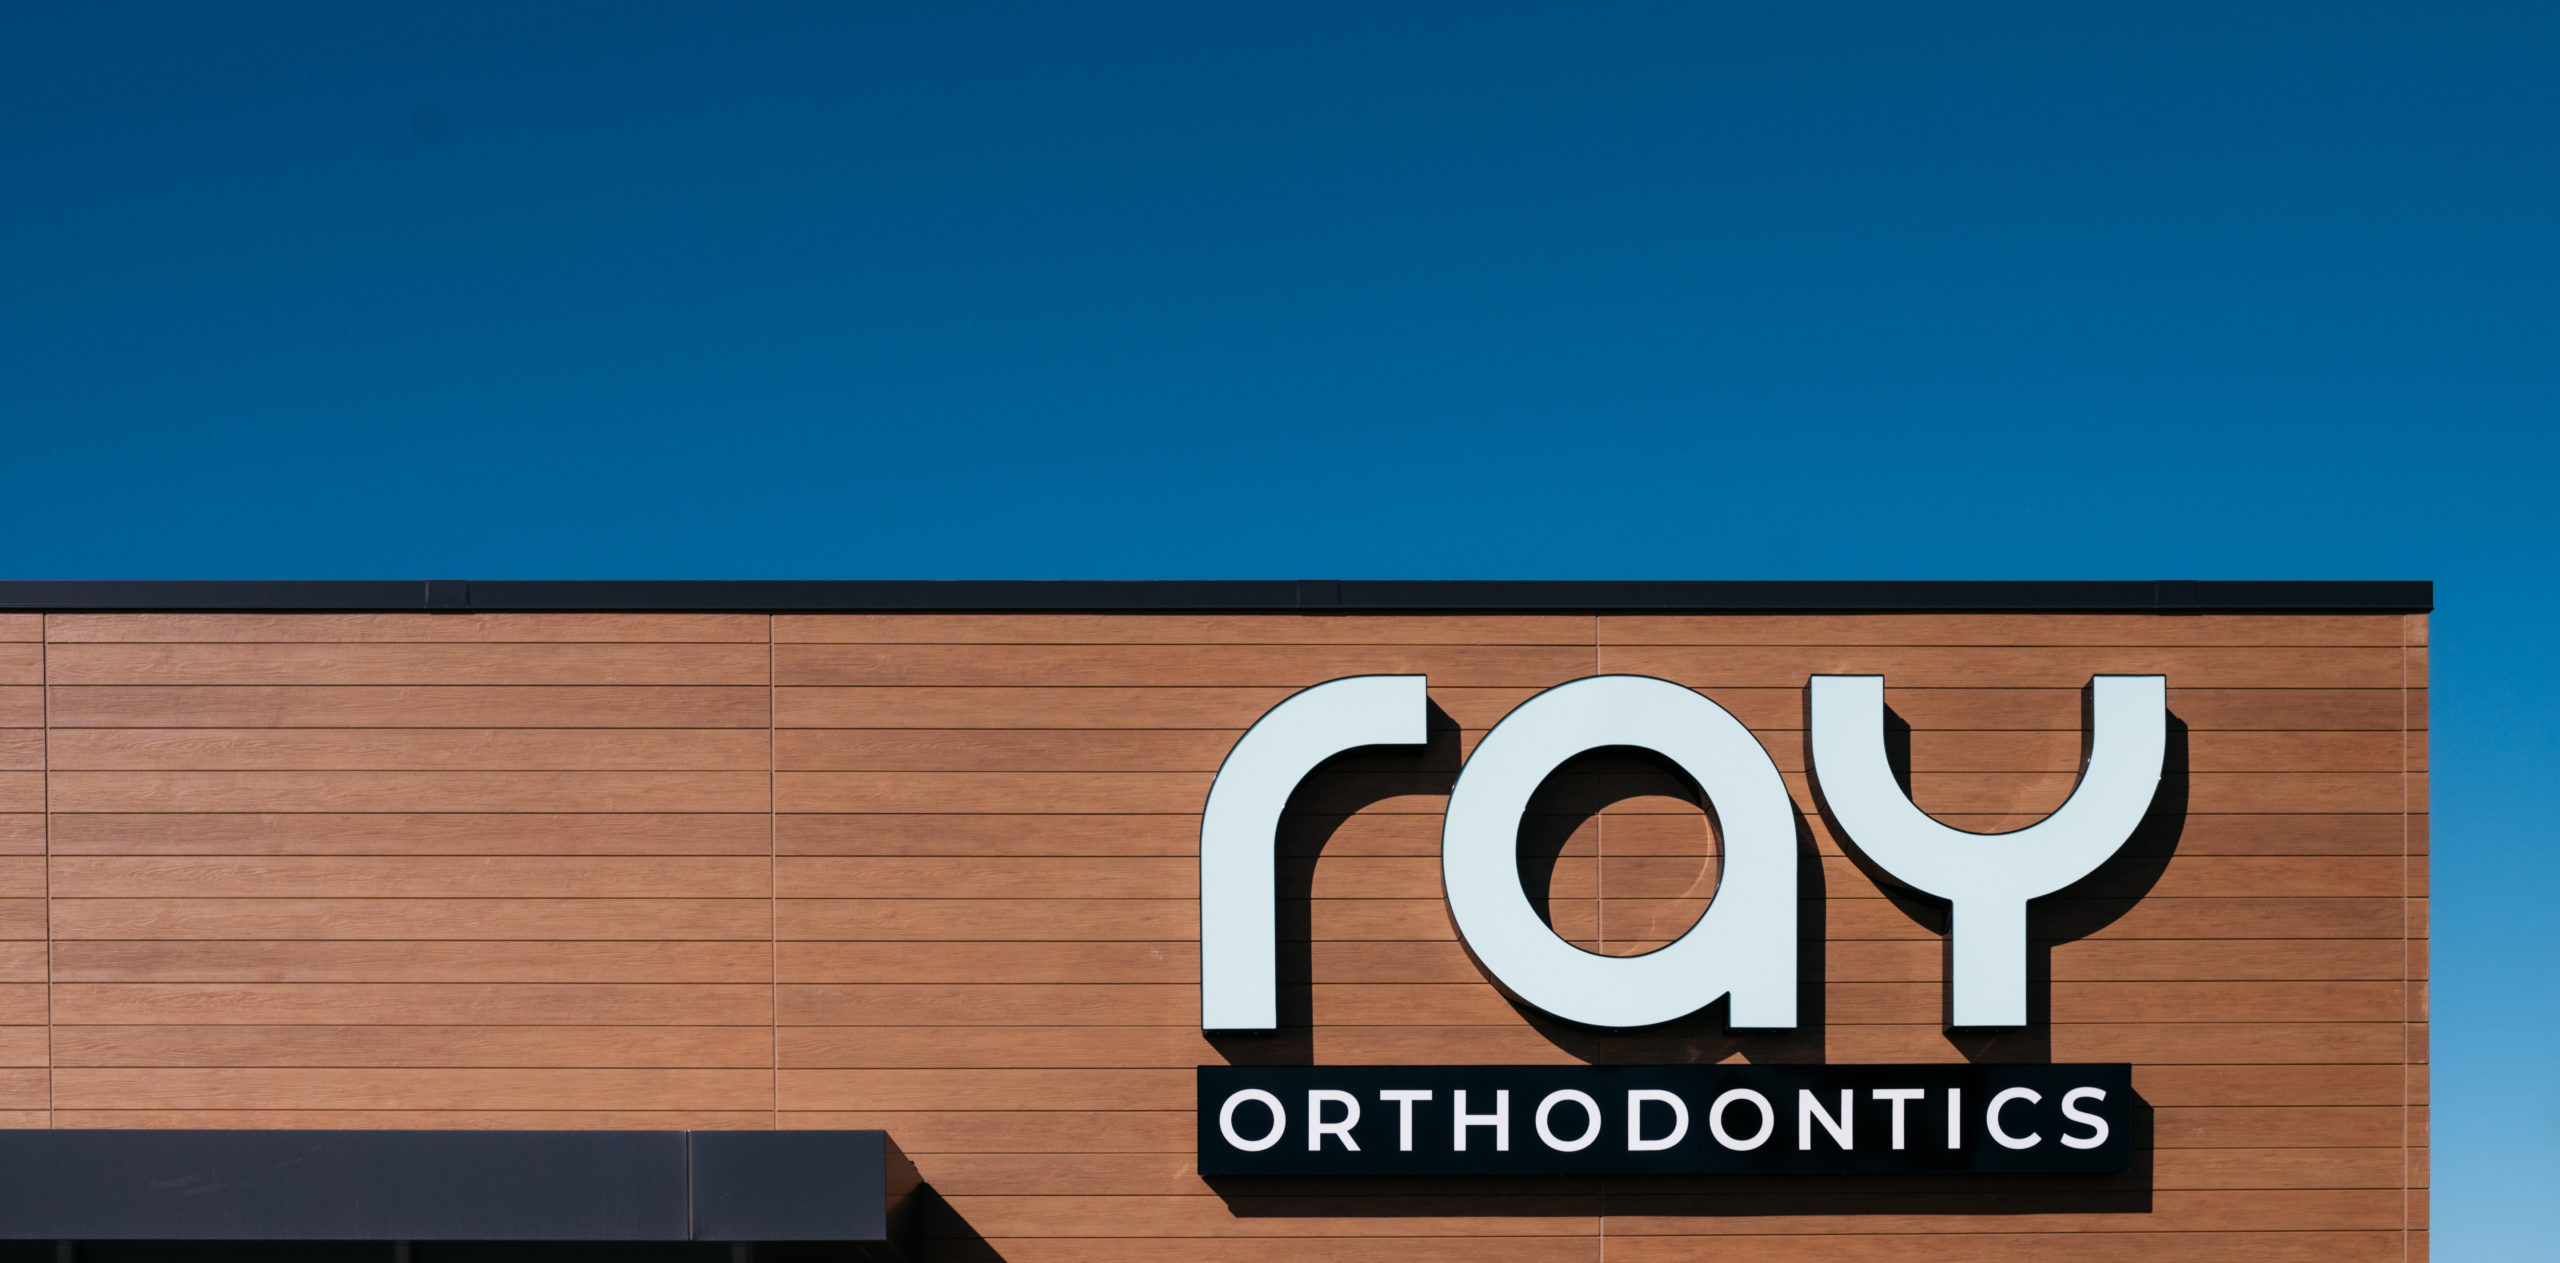 Ray orthodontics building sign